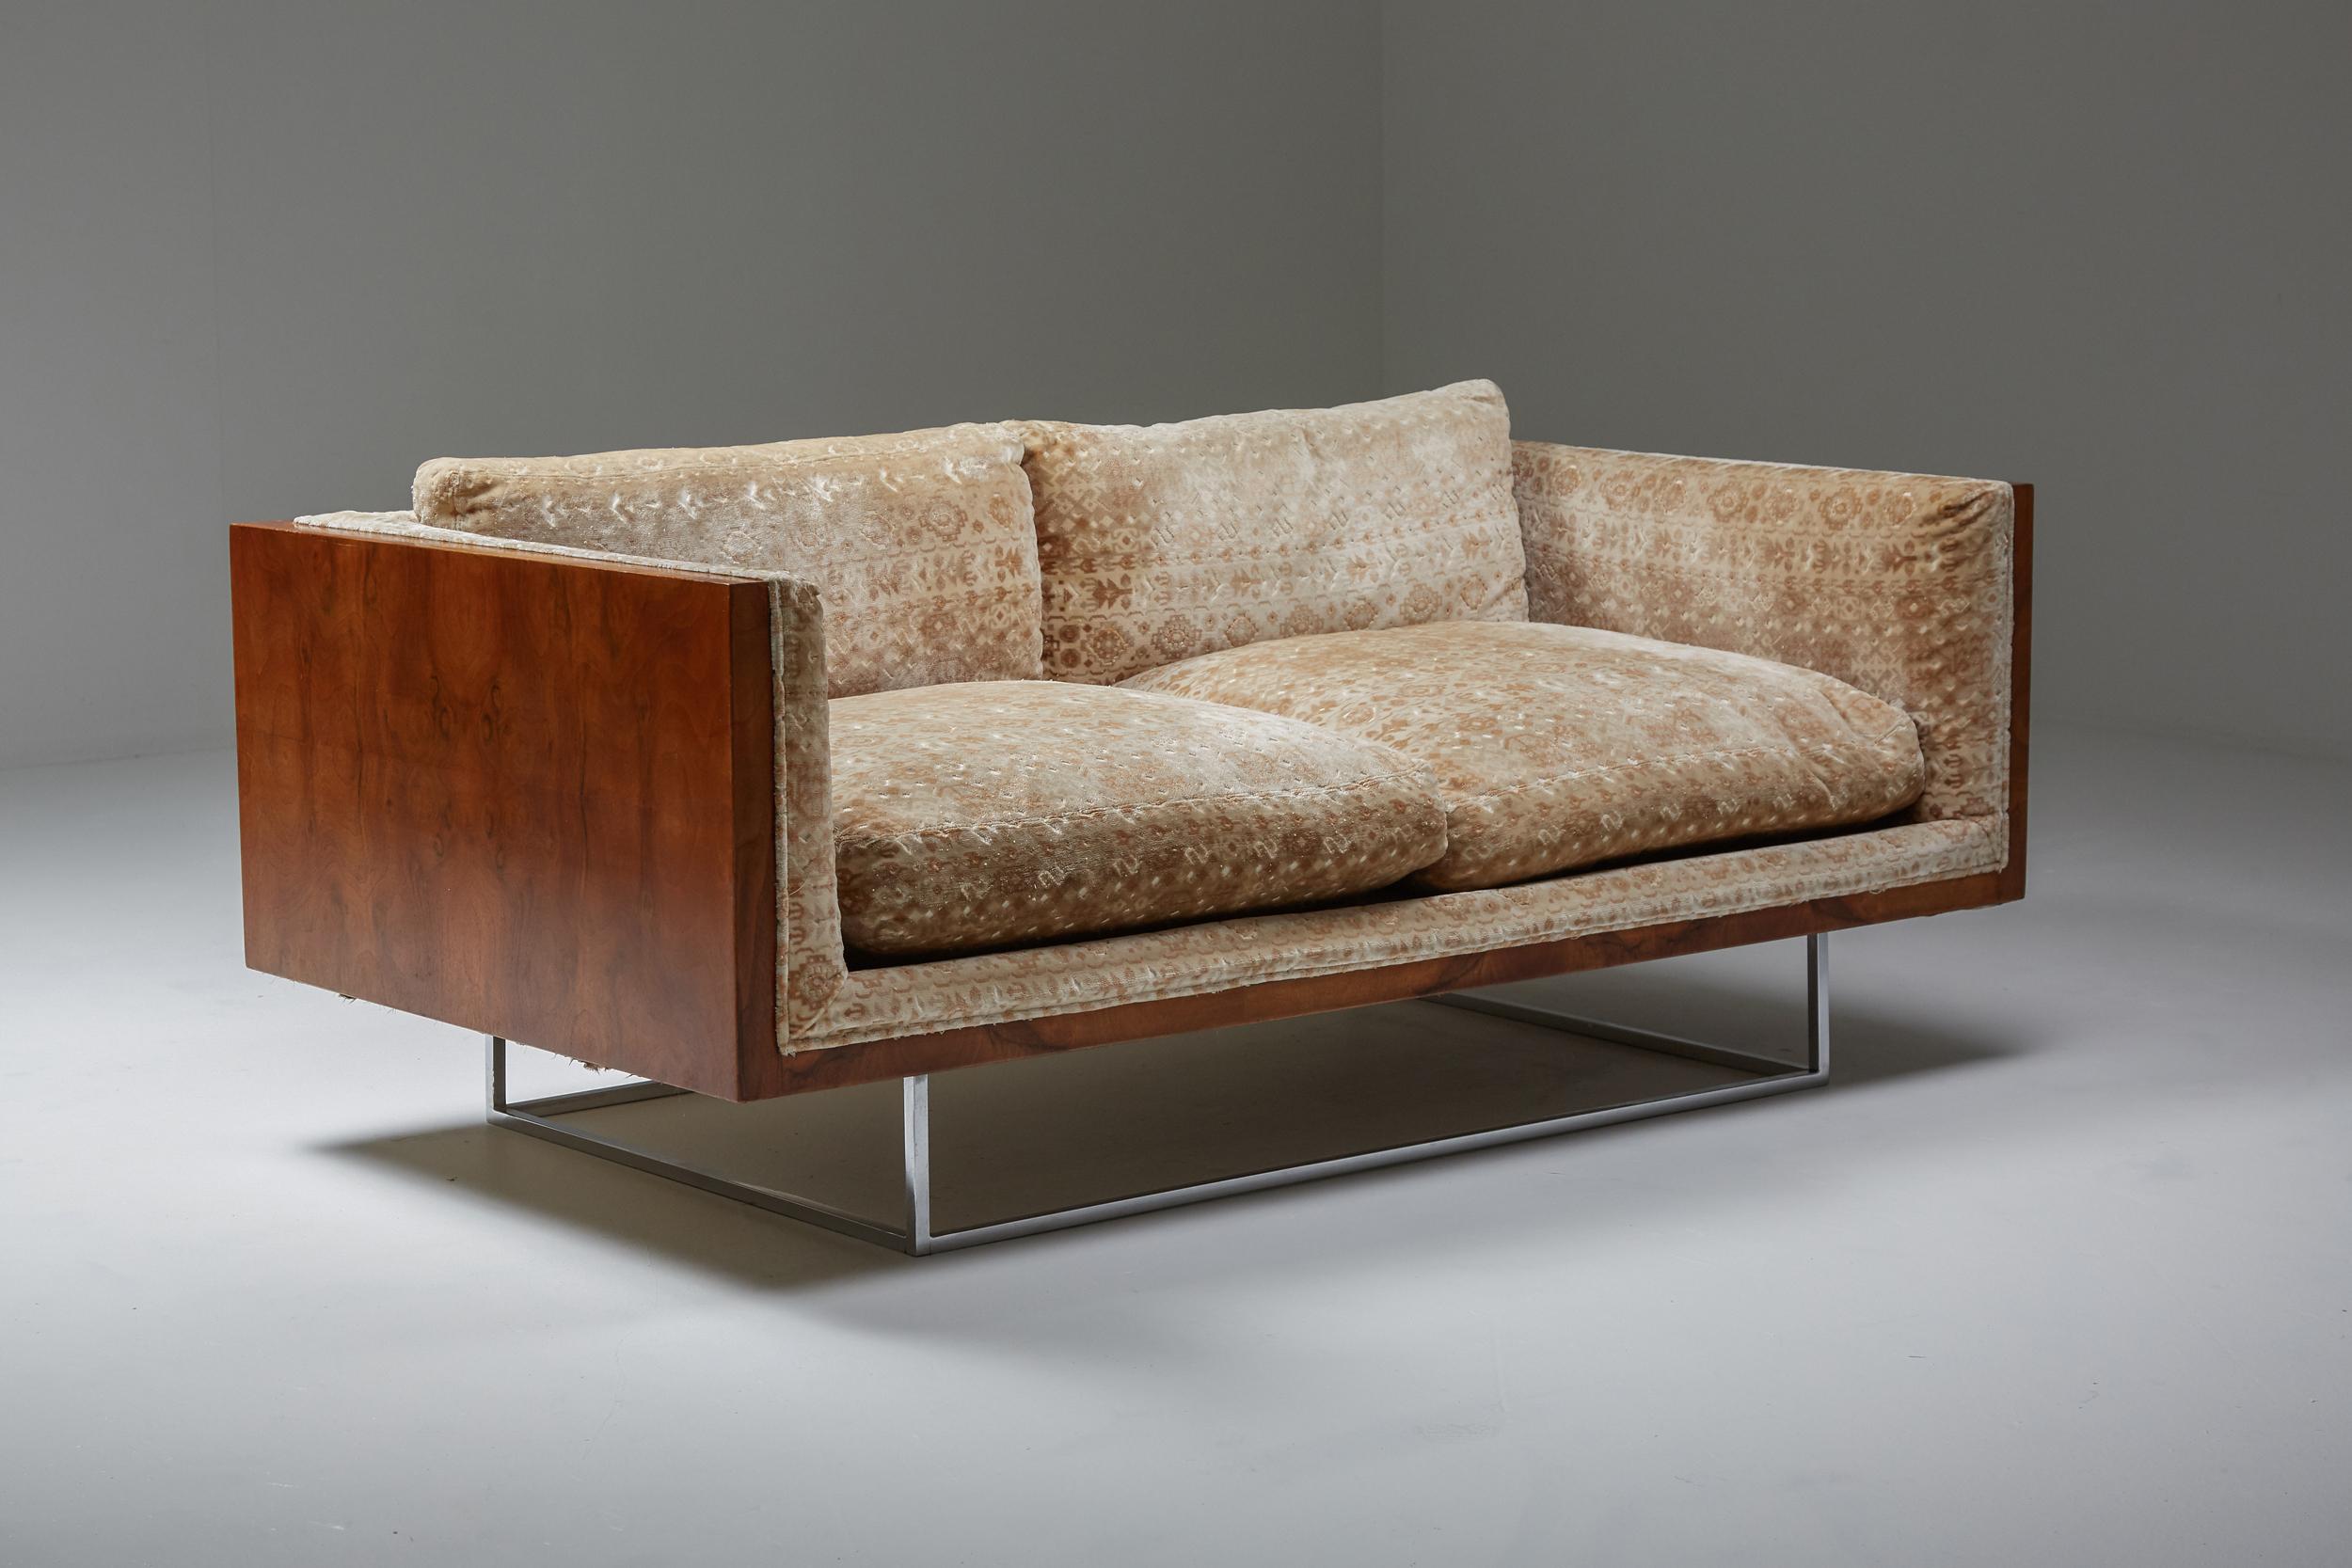 Late 20th Century American Post-War Design, Milo Baughman Love Seat Sofas, Burl, Chrome Sofa, 1971